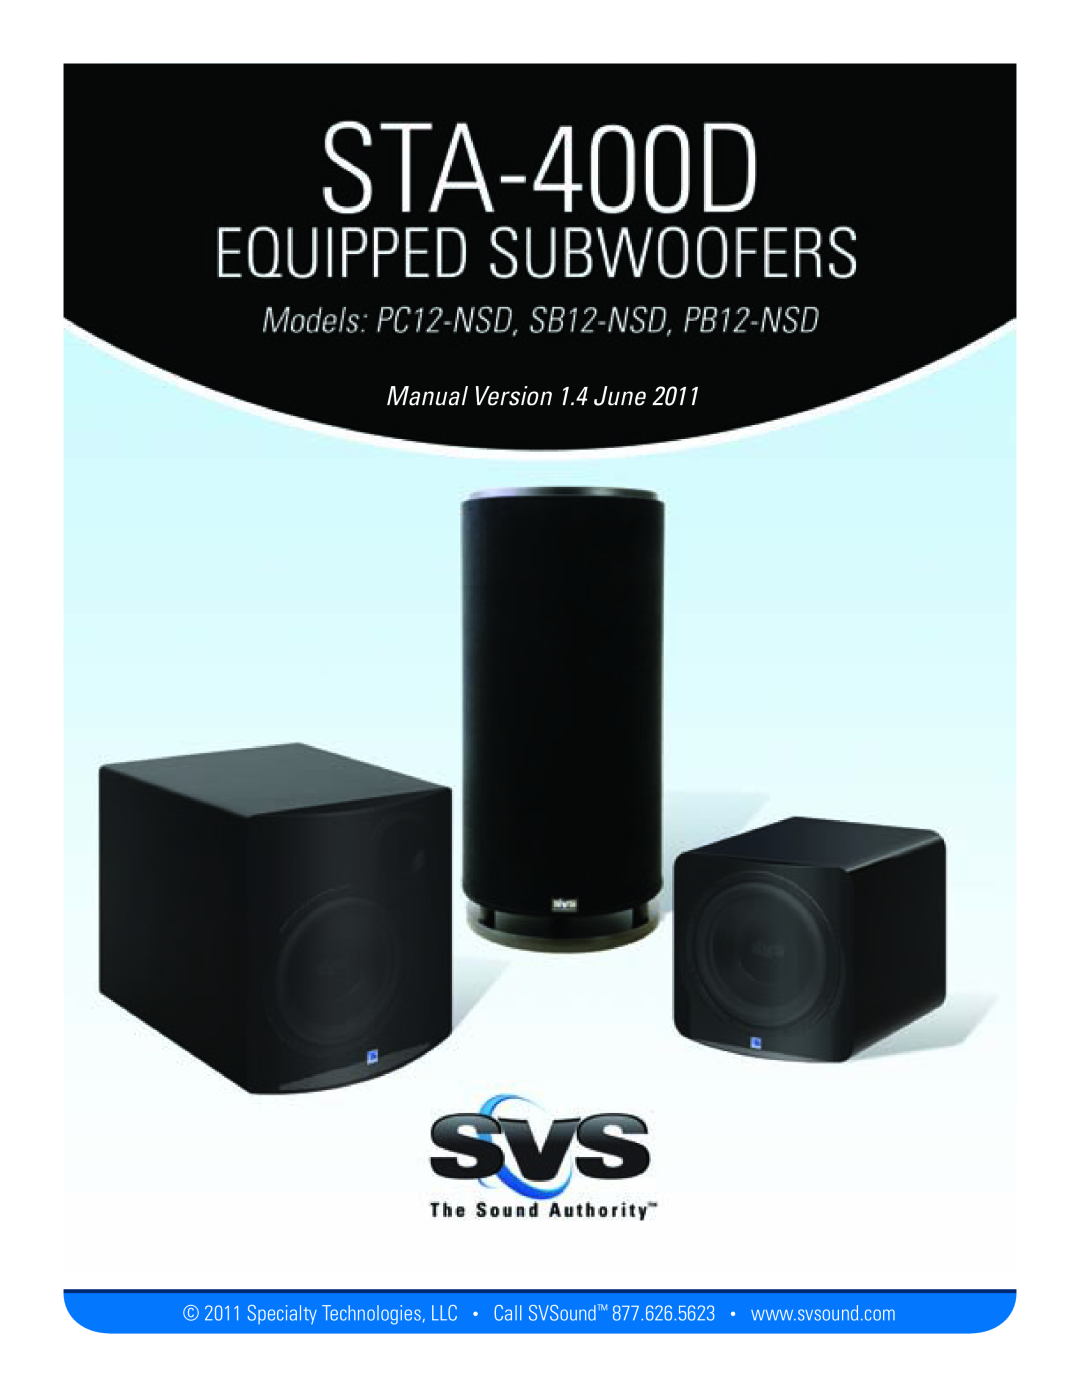 SV Sound PC12-NSD specifications O W N E R S ’ G U I D E, SV Sound, SVS PB12-NSDPowered Box and, Last update 30 September 